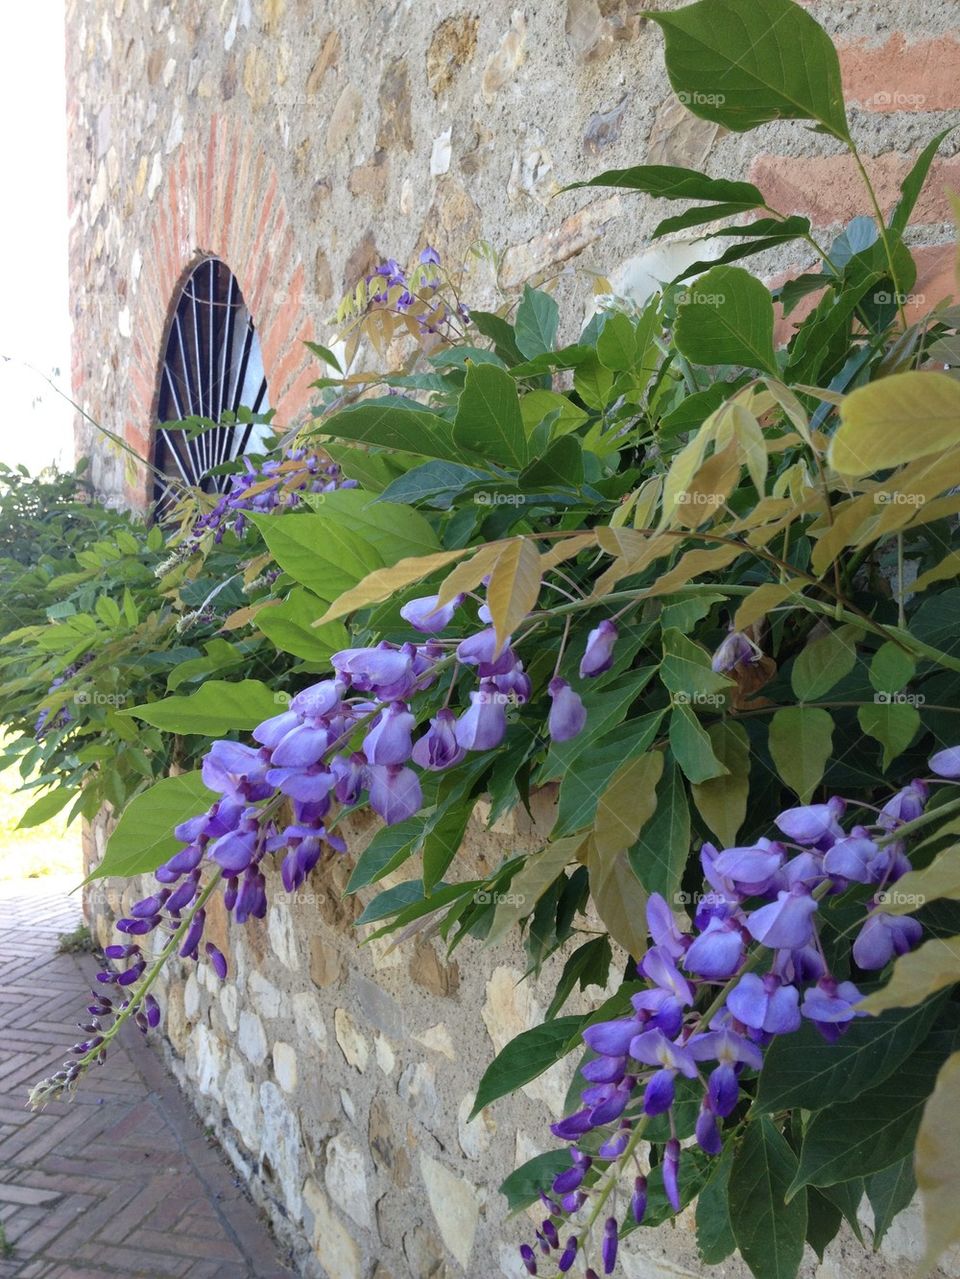 Flowers of Tuscany